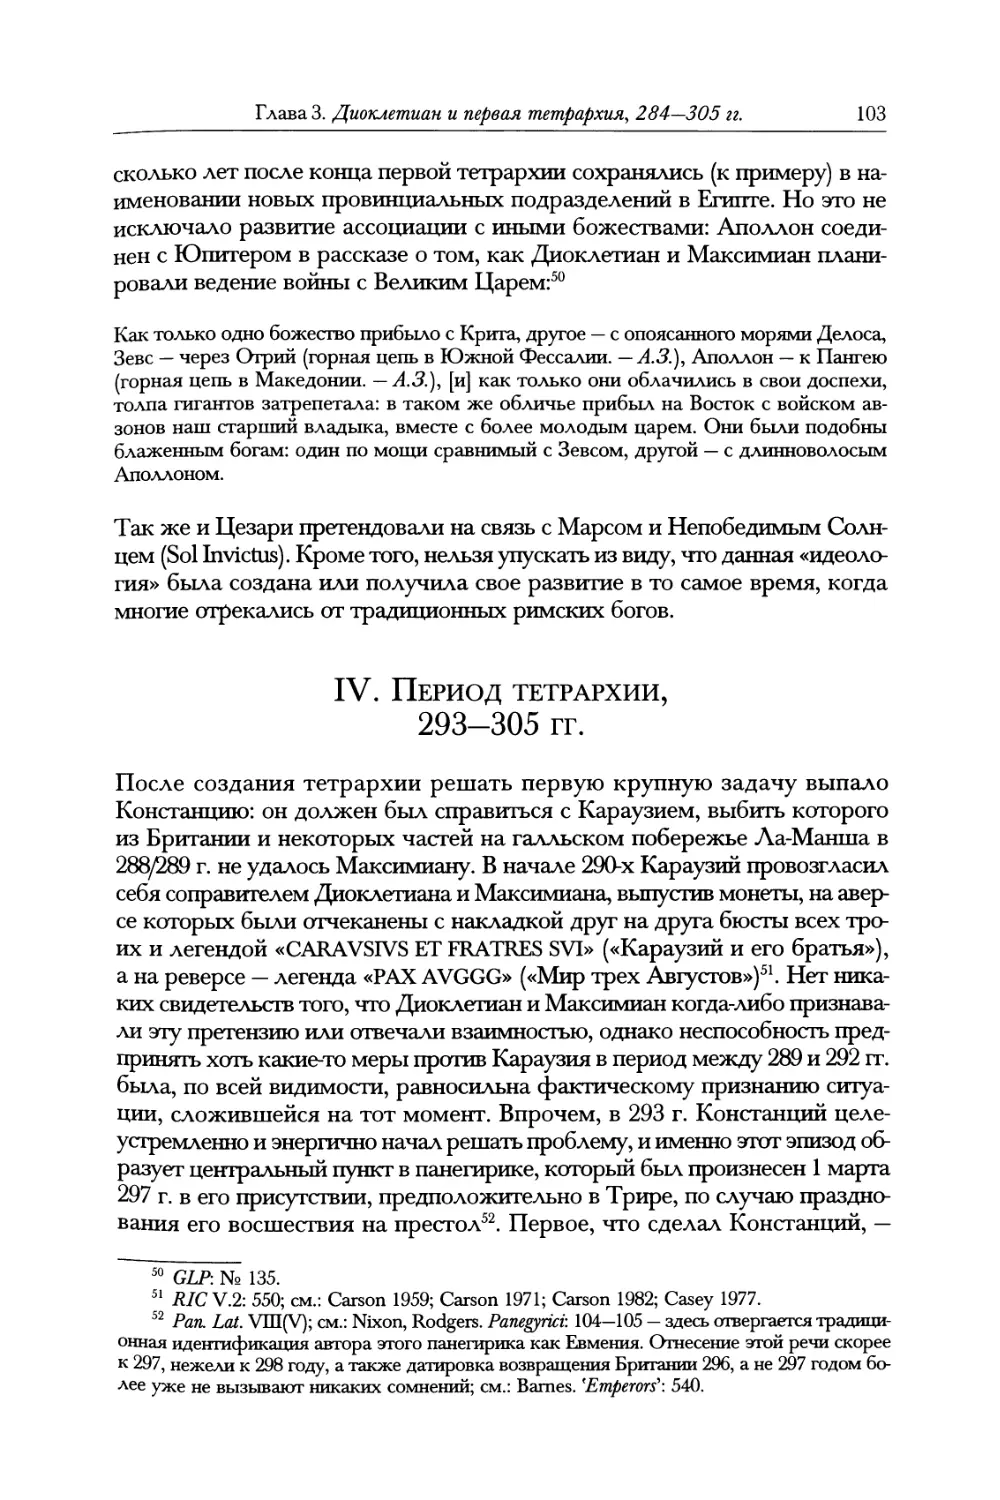 IV. Период тетрархии, 293—305 гг.